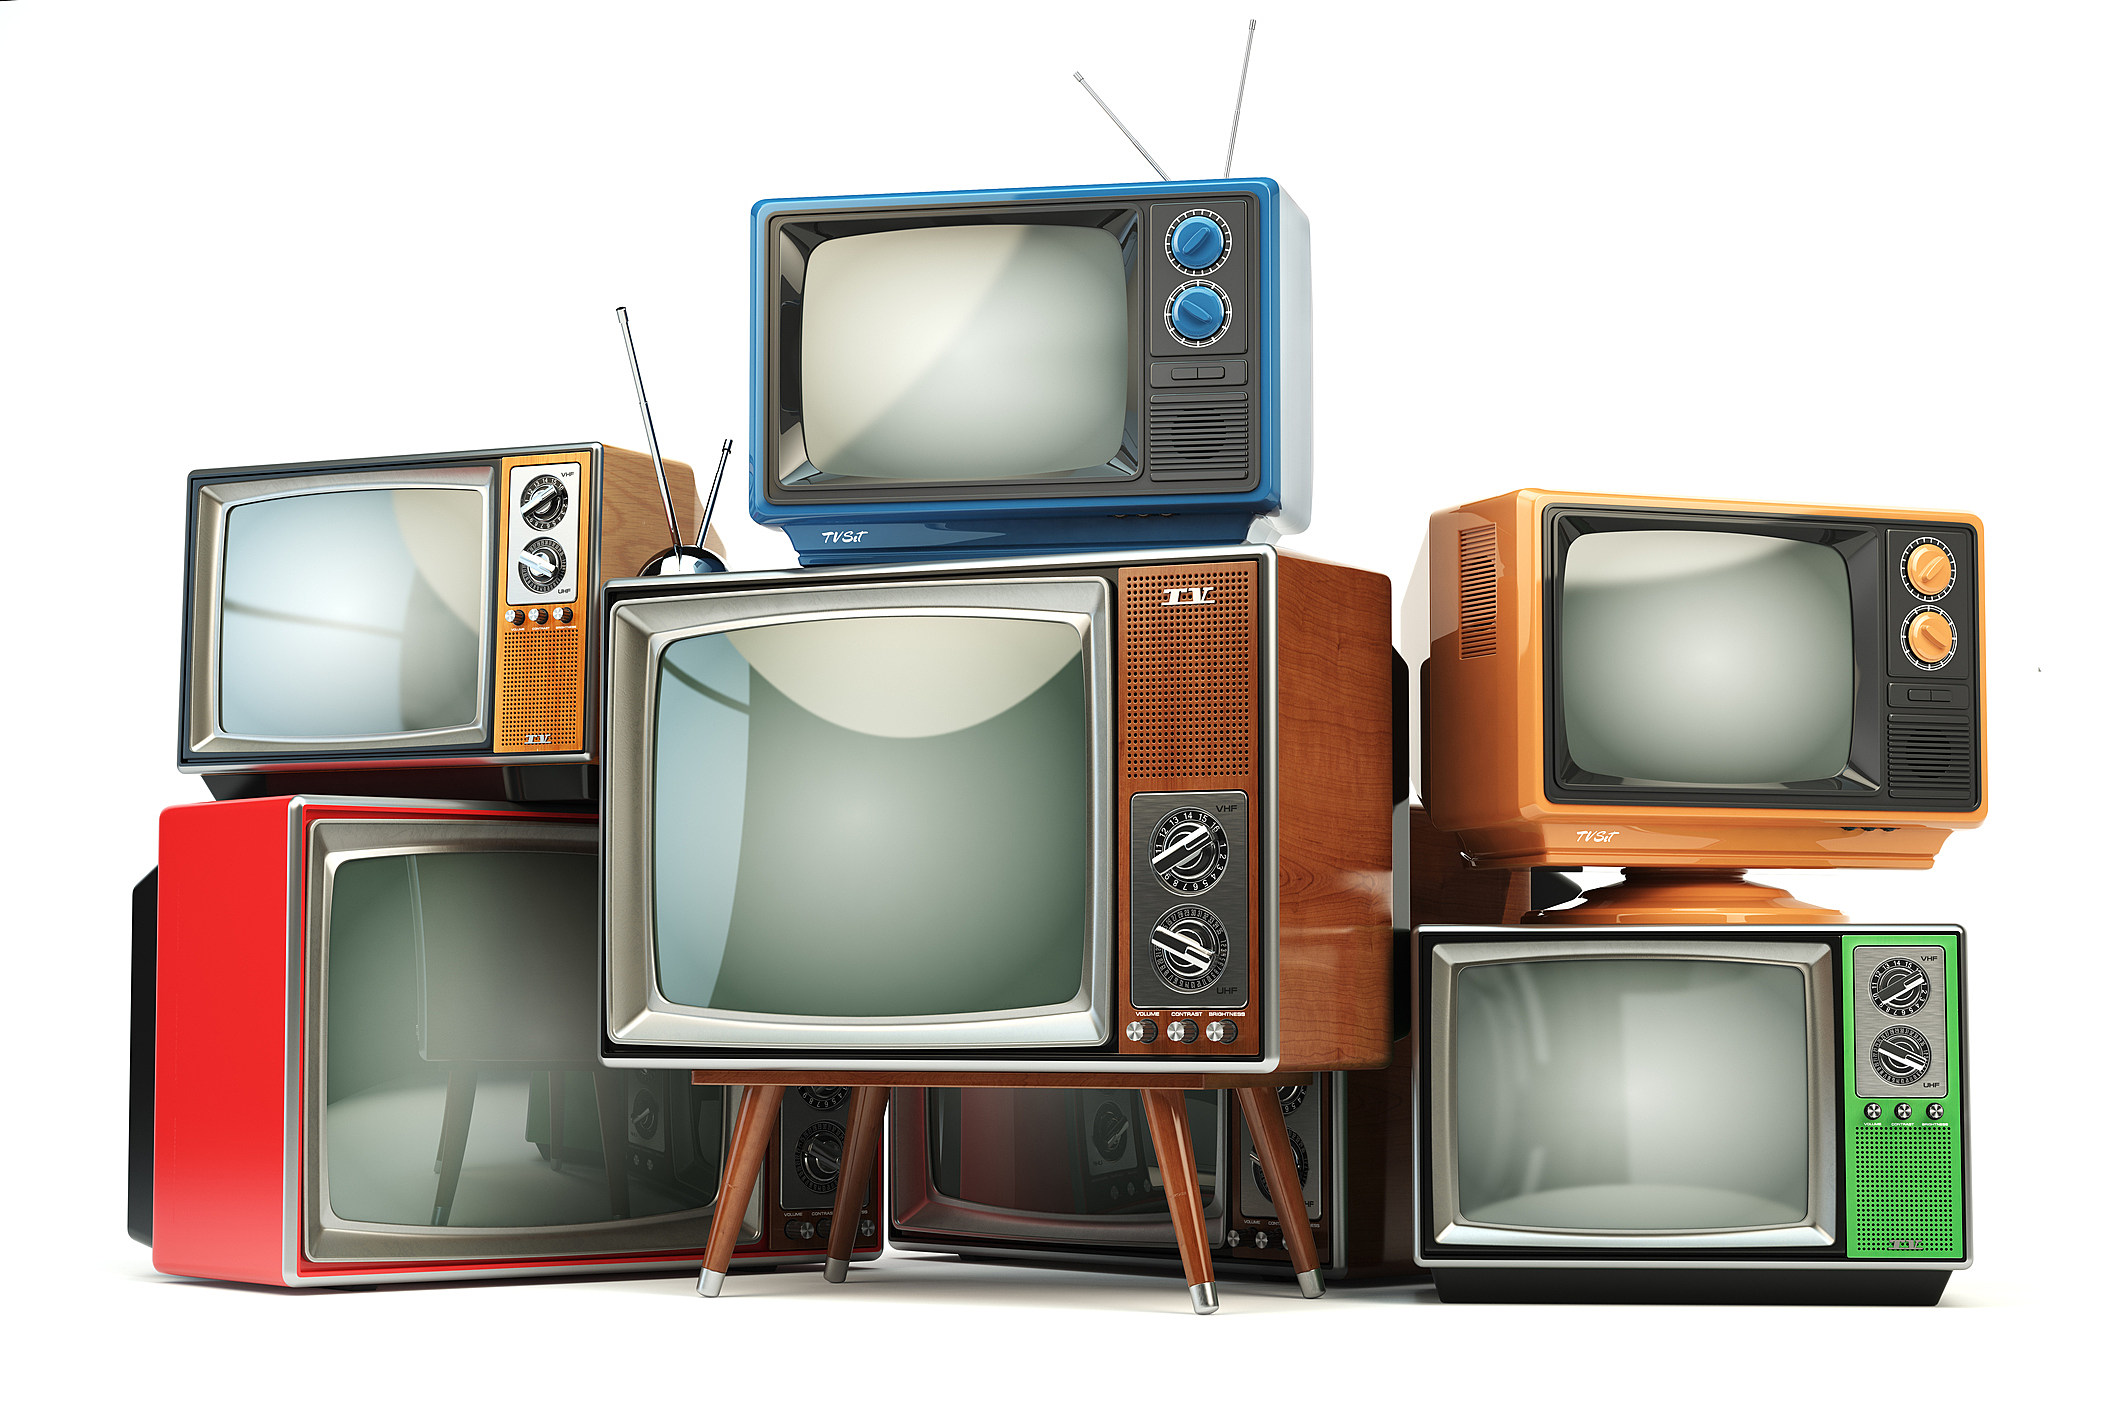 Best TV Brands in 2020 According To Tech Engineers